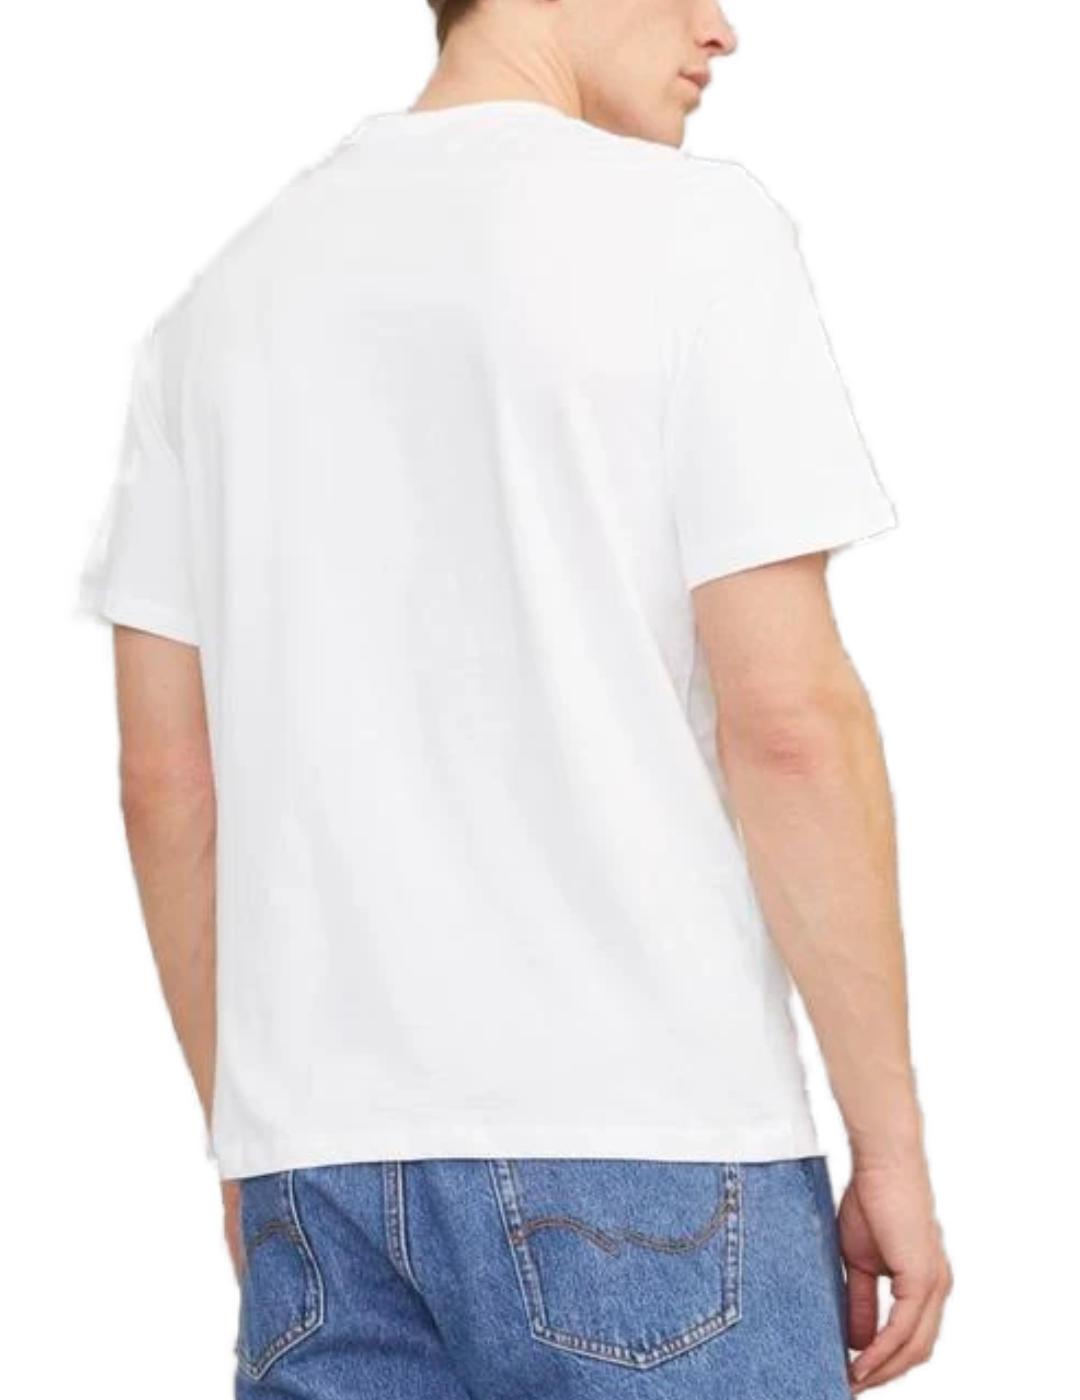 Camiseta Jack&Jones Zuri blanco manga corta para hombre